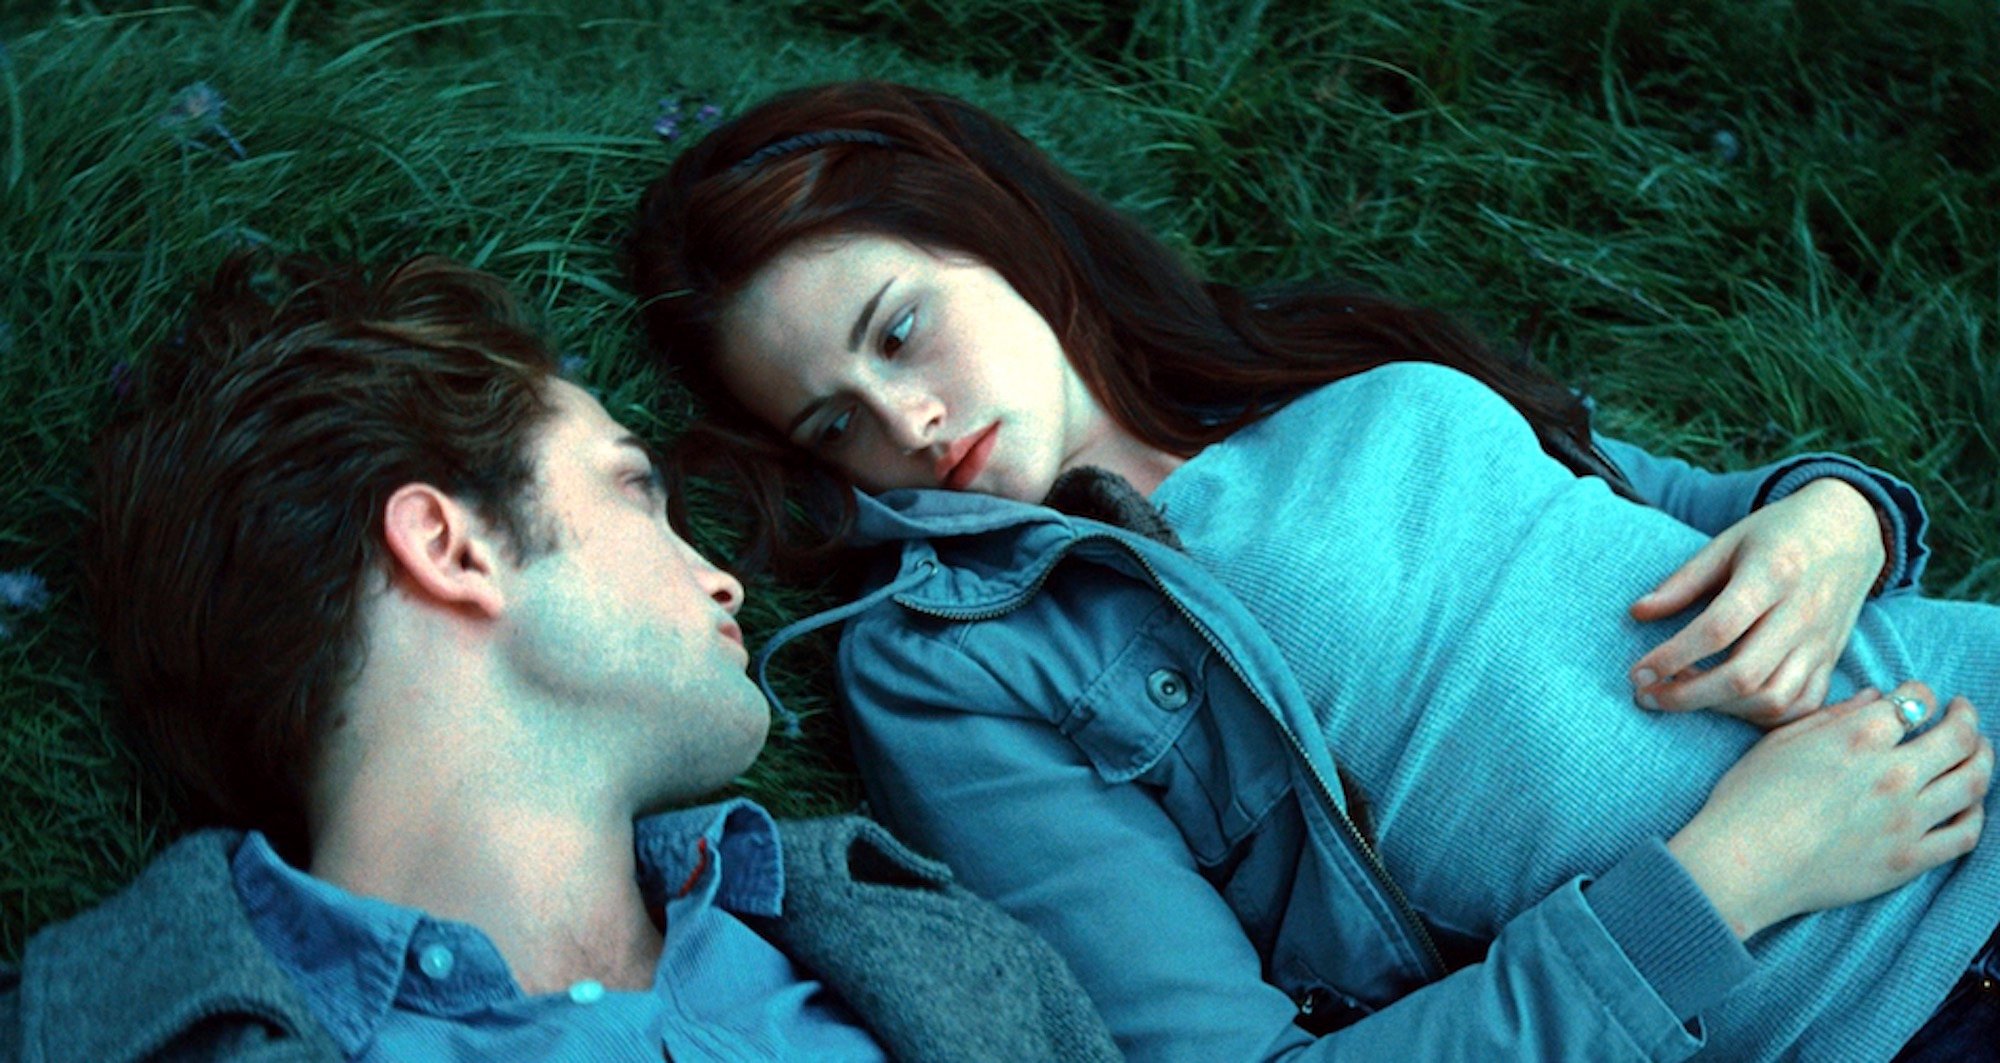 Edward Cullen (Robert Pattinson) and Bella Swan (Kristen Stewart) in his meadow in 'Twilight'